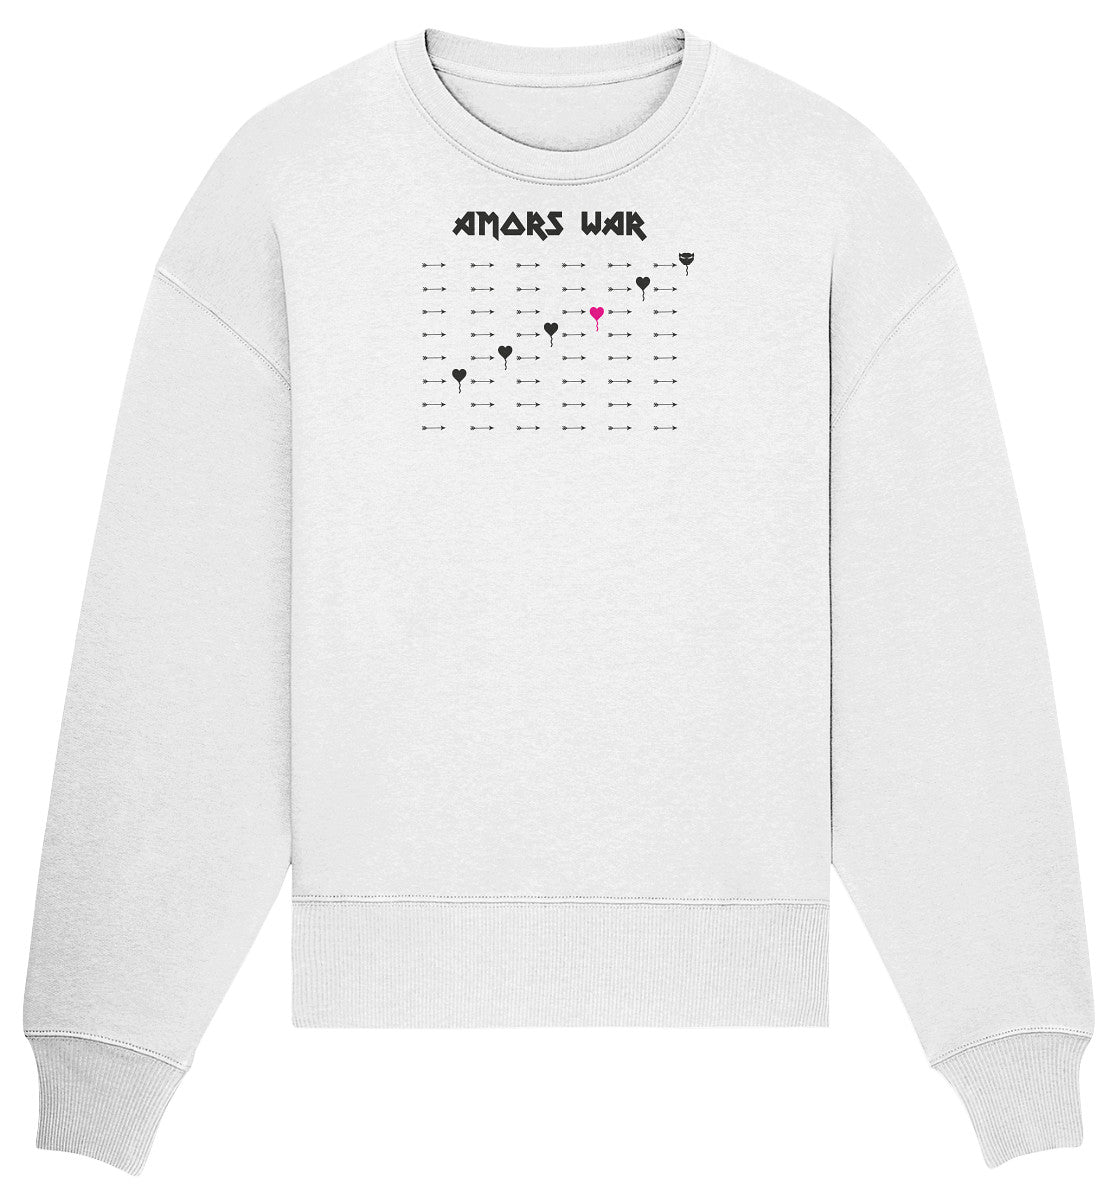 AMORS WAR - Organic Oversize Sweatshirt